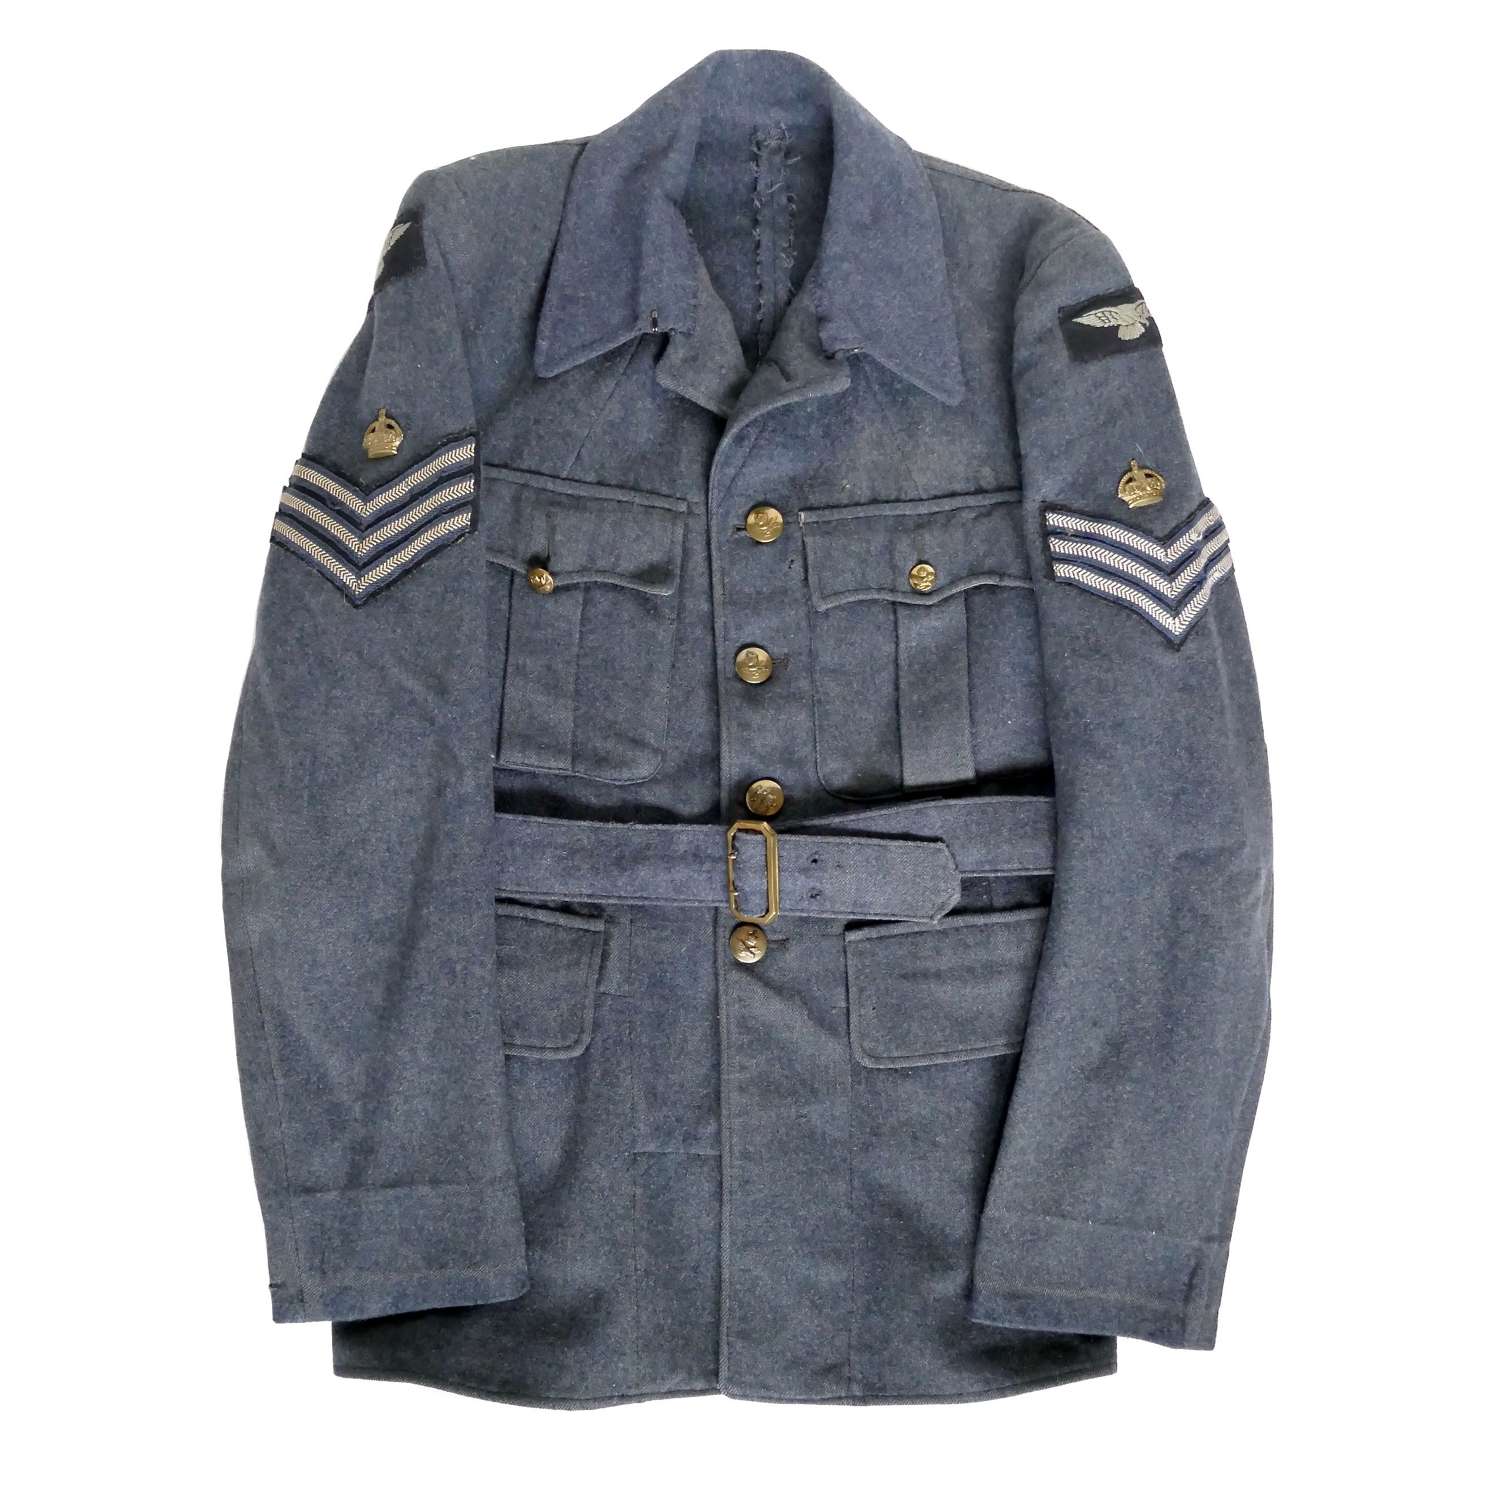 RAF flight sergeant insignia with 'free' tunic